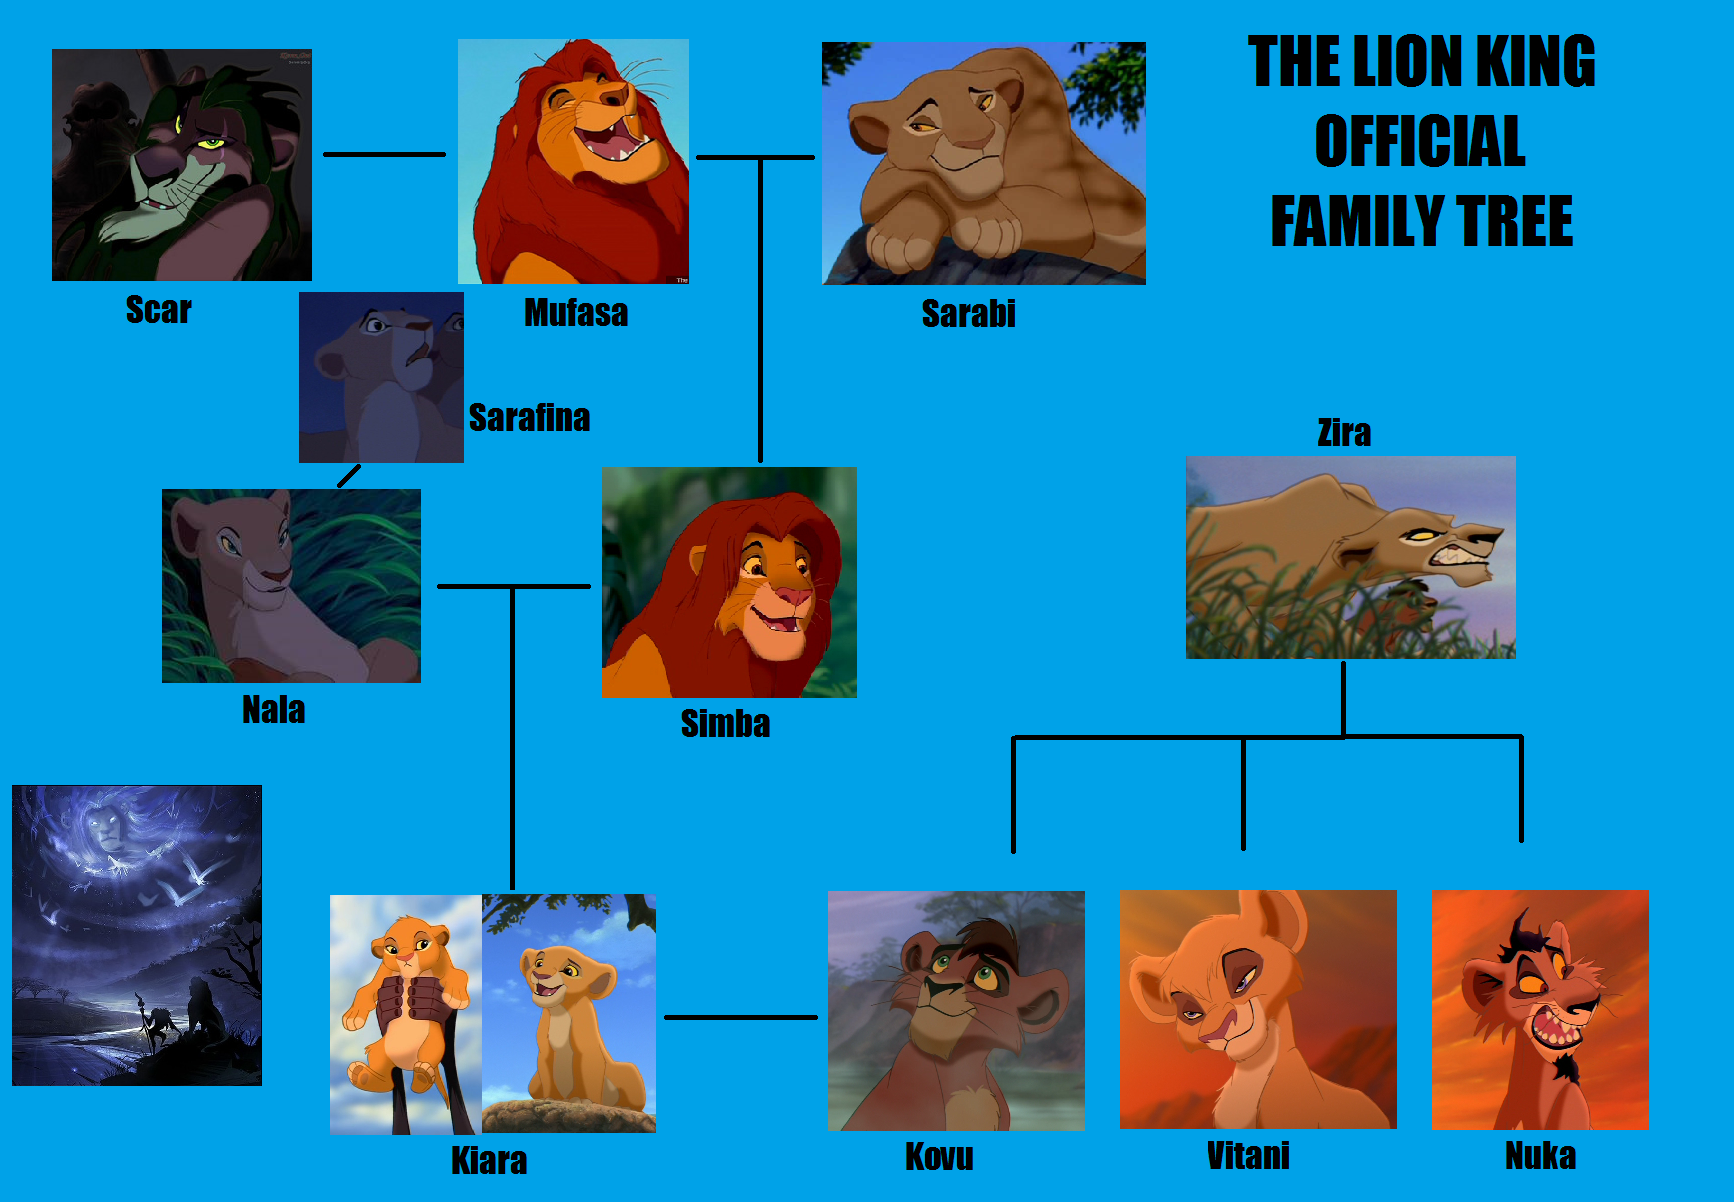 Tlk Offical Family Tree - Simba Lion King Family Tree - HD Wallpaper 